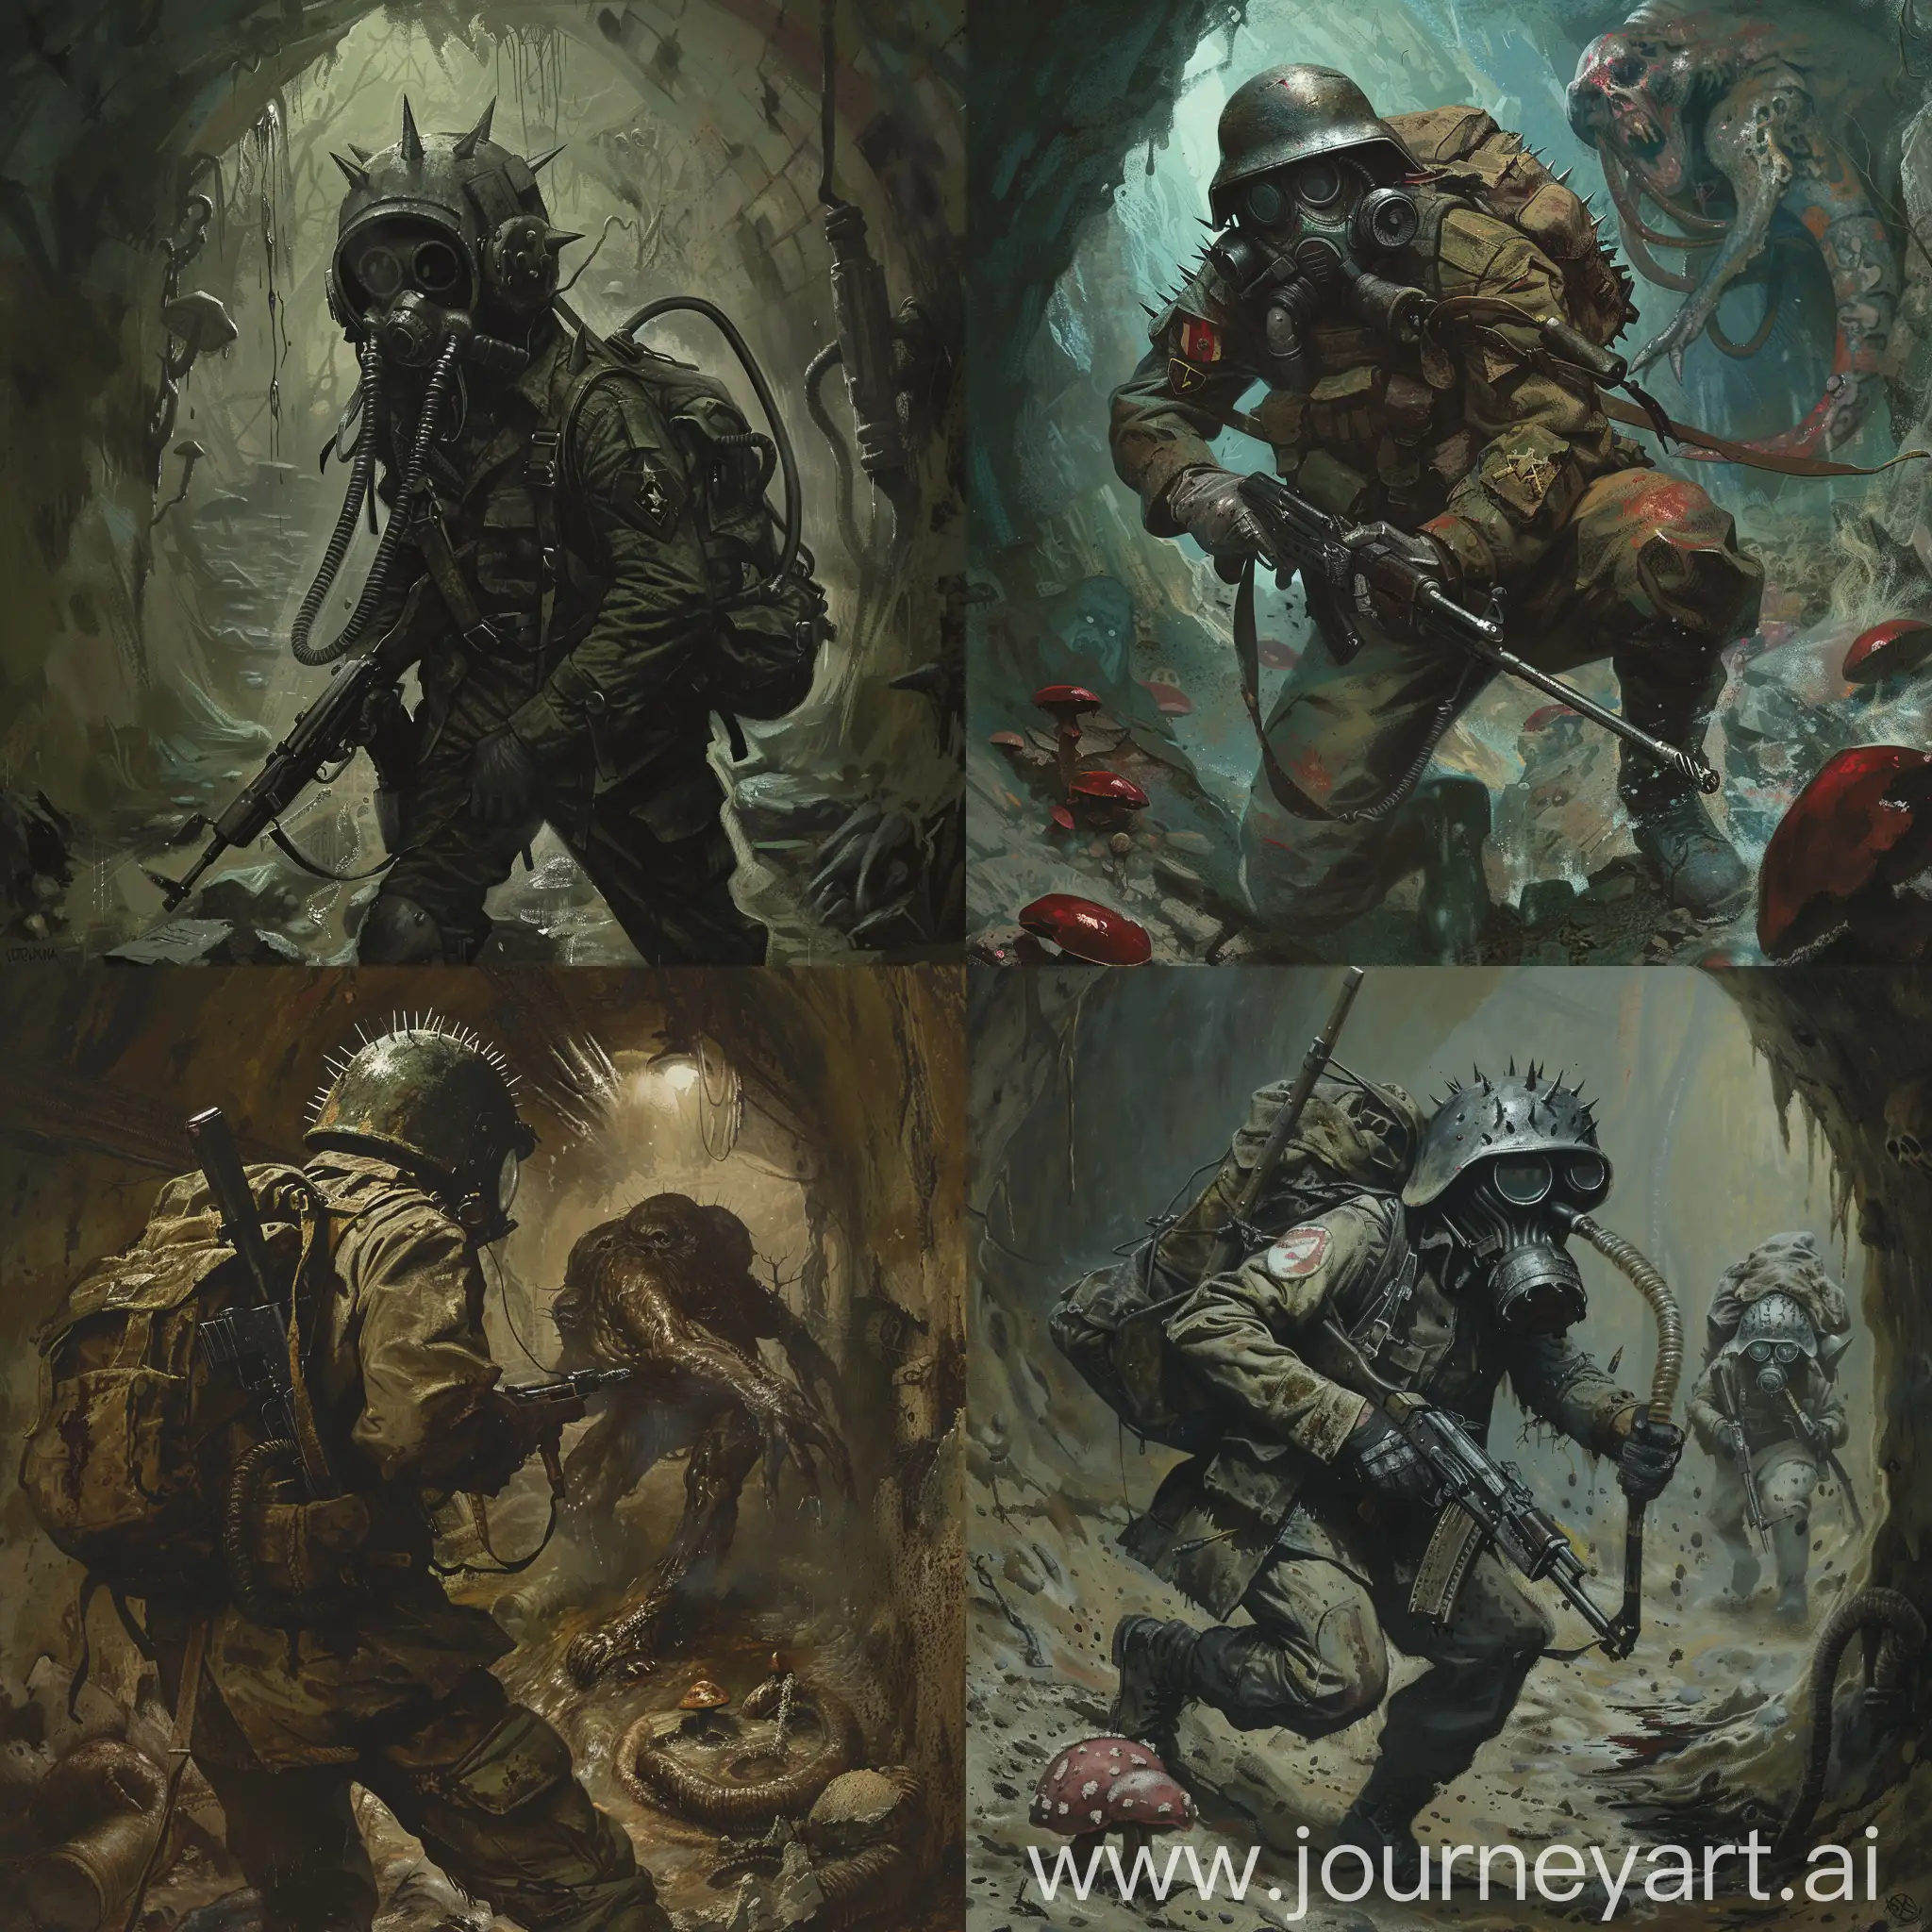 Stalker-in-Soviet-Uniform-Evading-Giant-Mutant-Worm-in-Catacombs